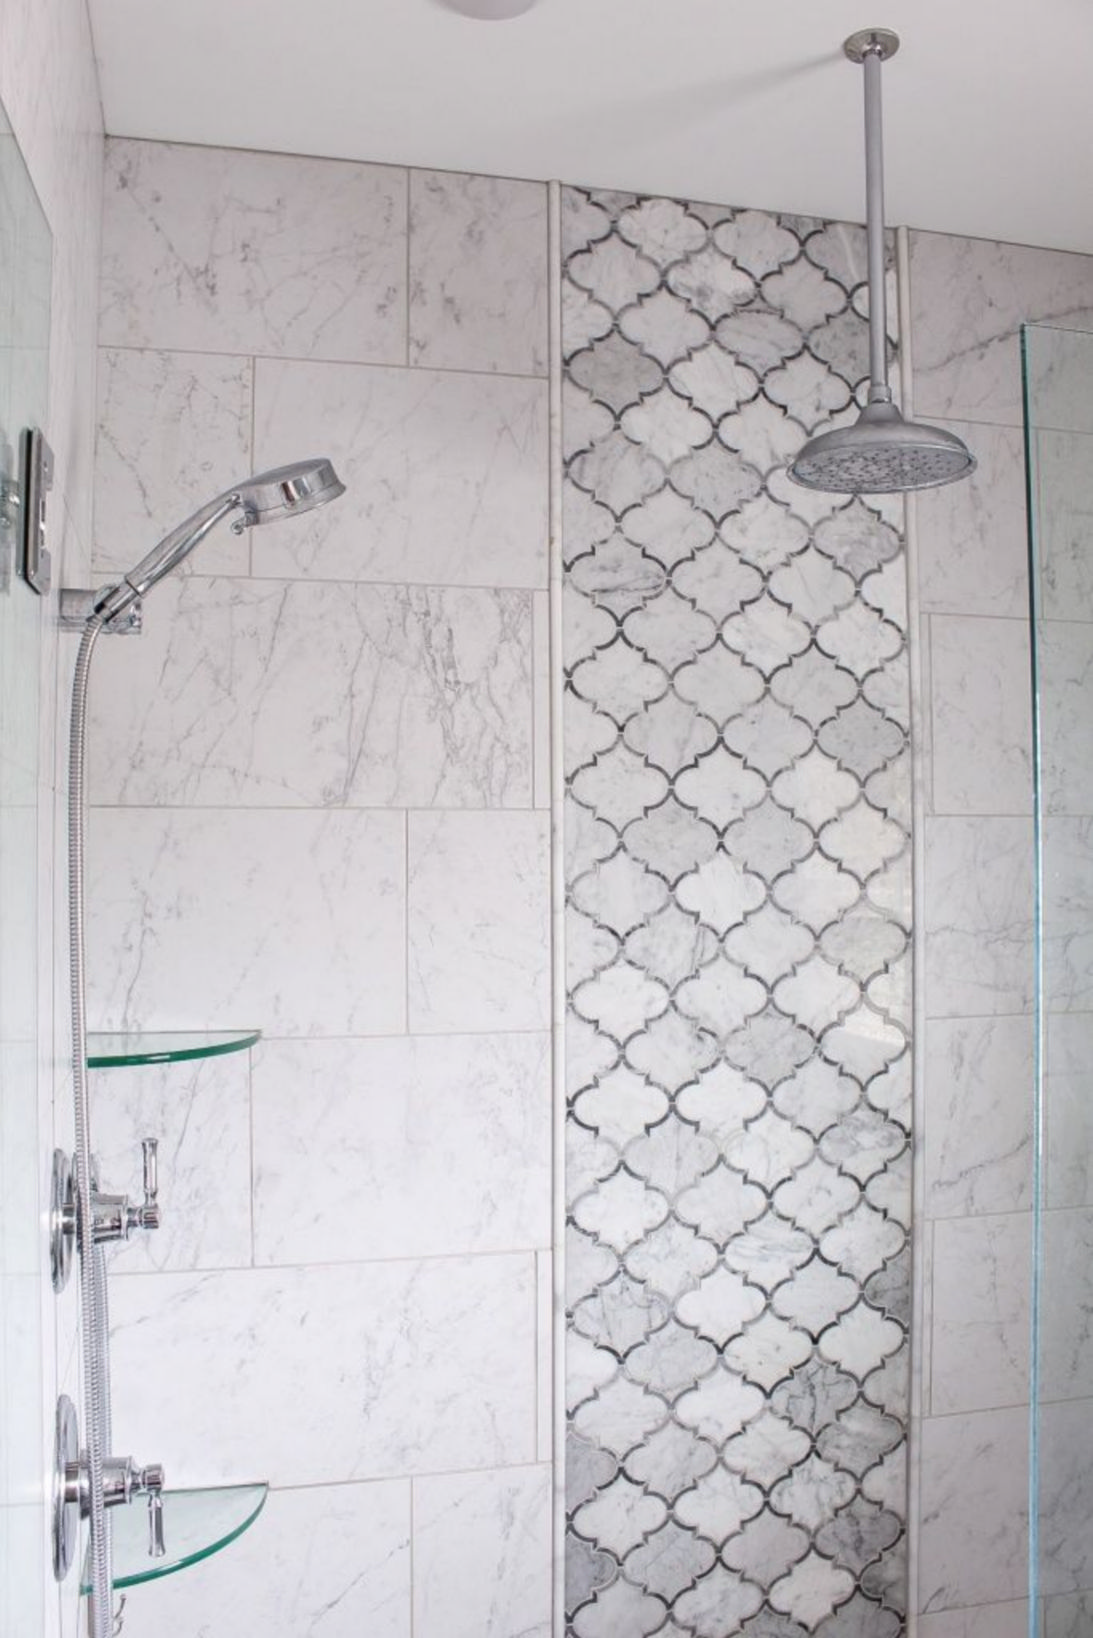 Different bathroom tile idea elements to base your bathroom tile ideas and designs for different looks 6